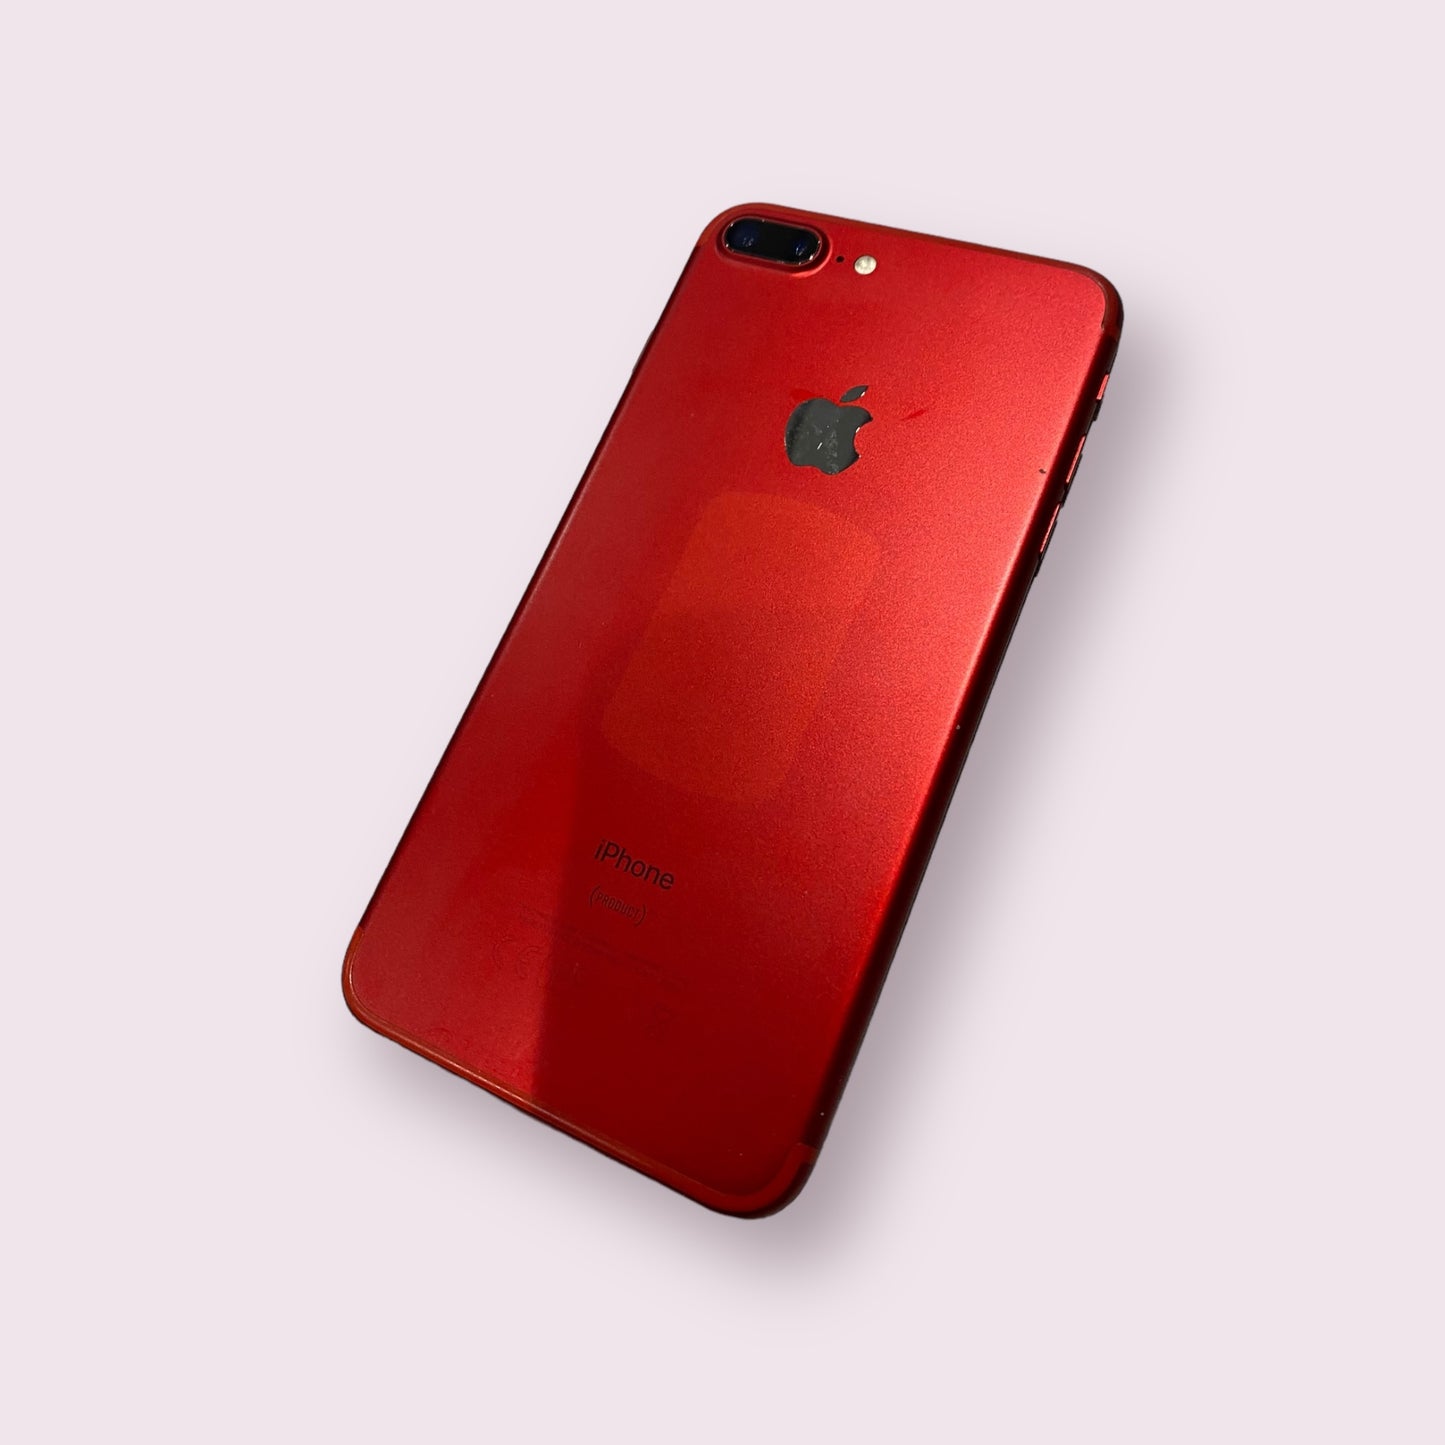 Apple iPhone 7 Plus 128GB Product Red Unlocked - Grade B - BH 100%